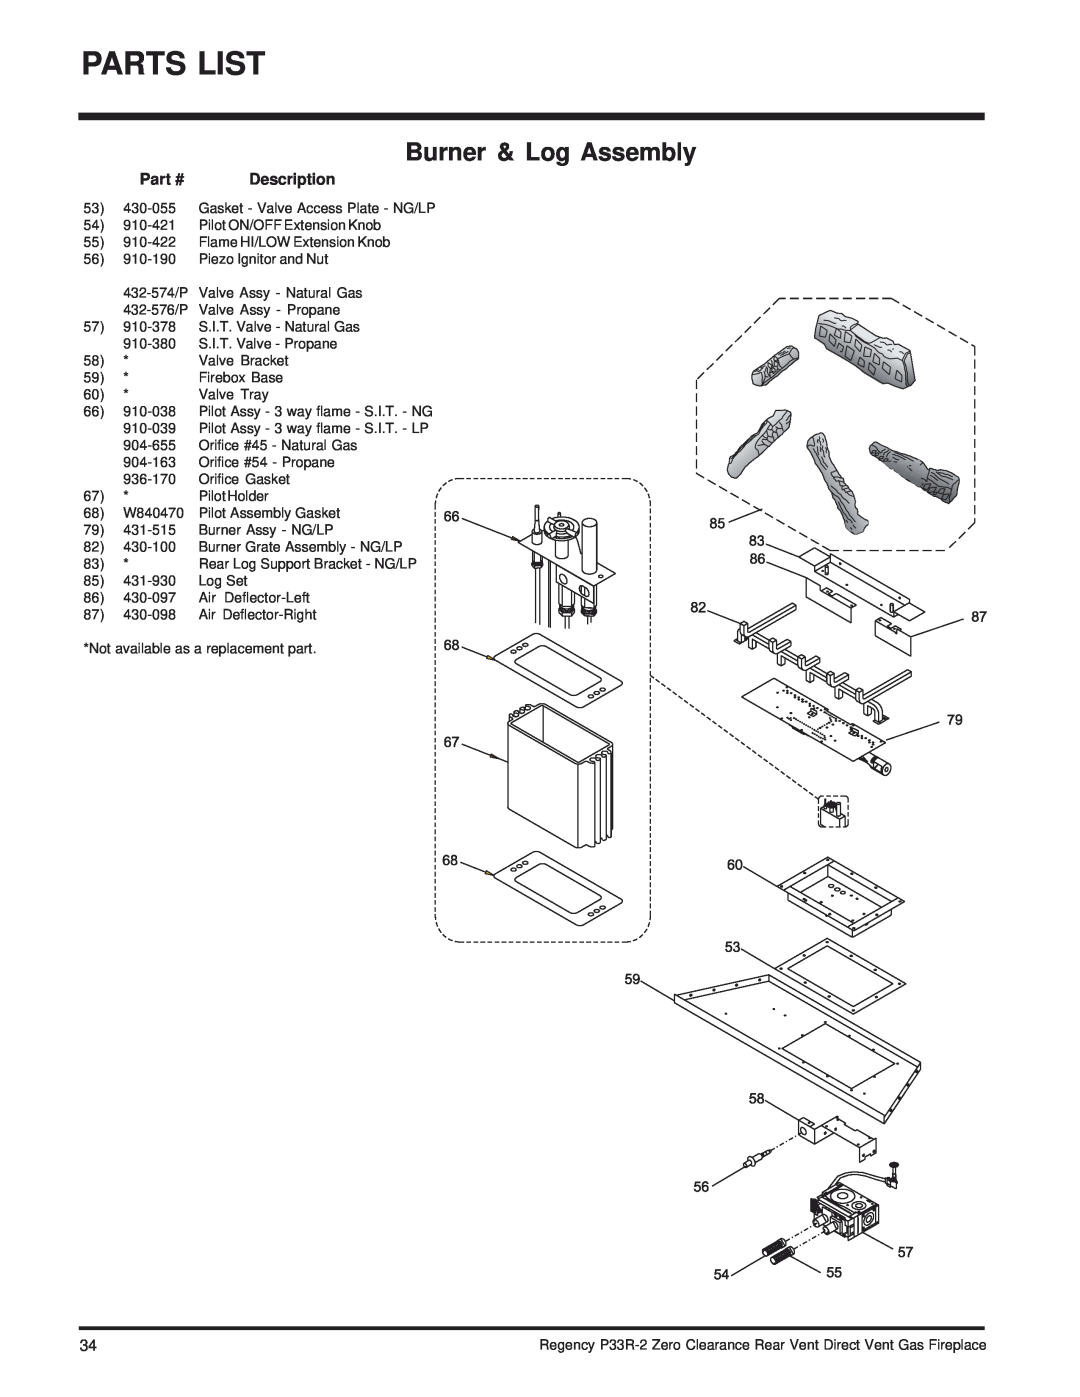 Regency P33R-LP2, P33R-NG2 installation manual Burner & Log Assembly, Description 